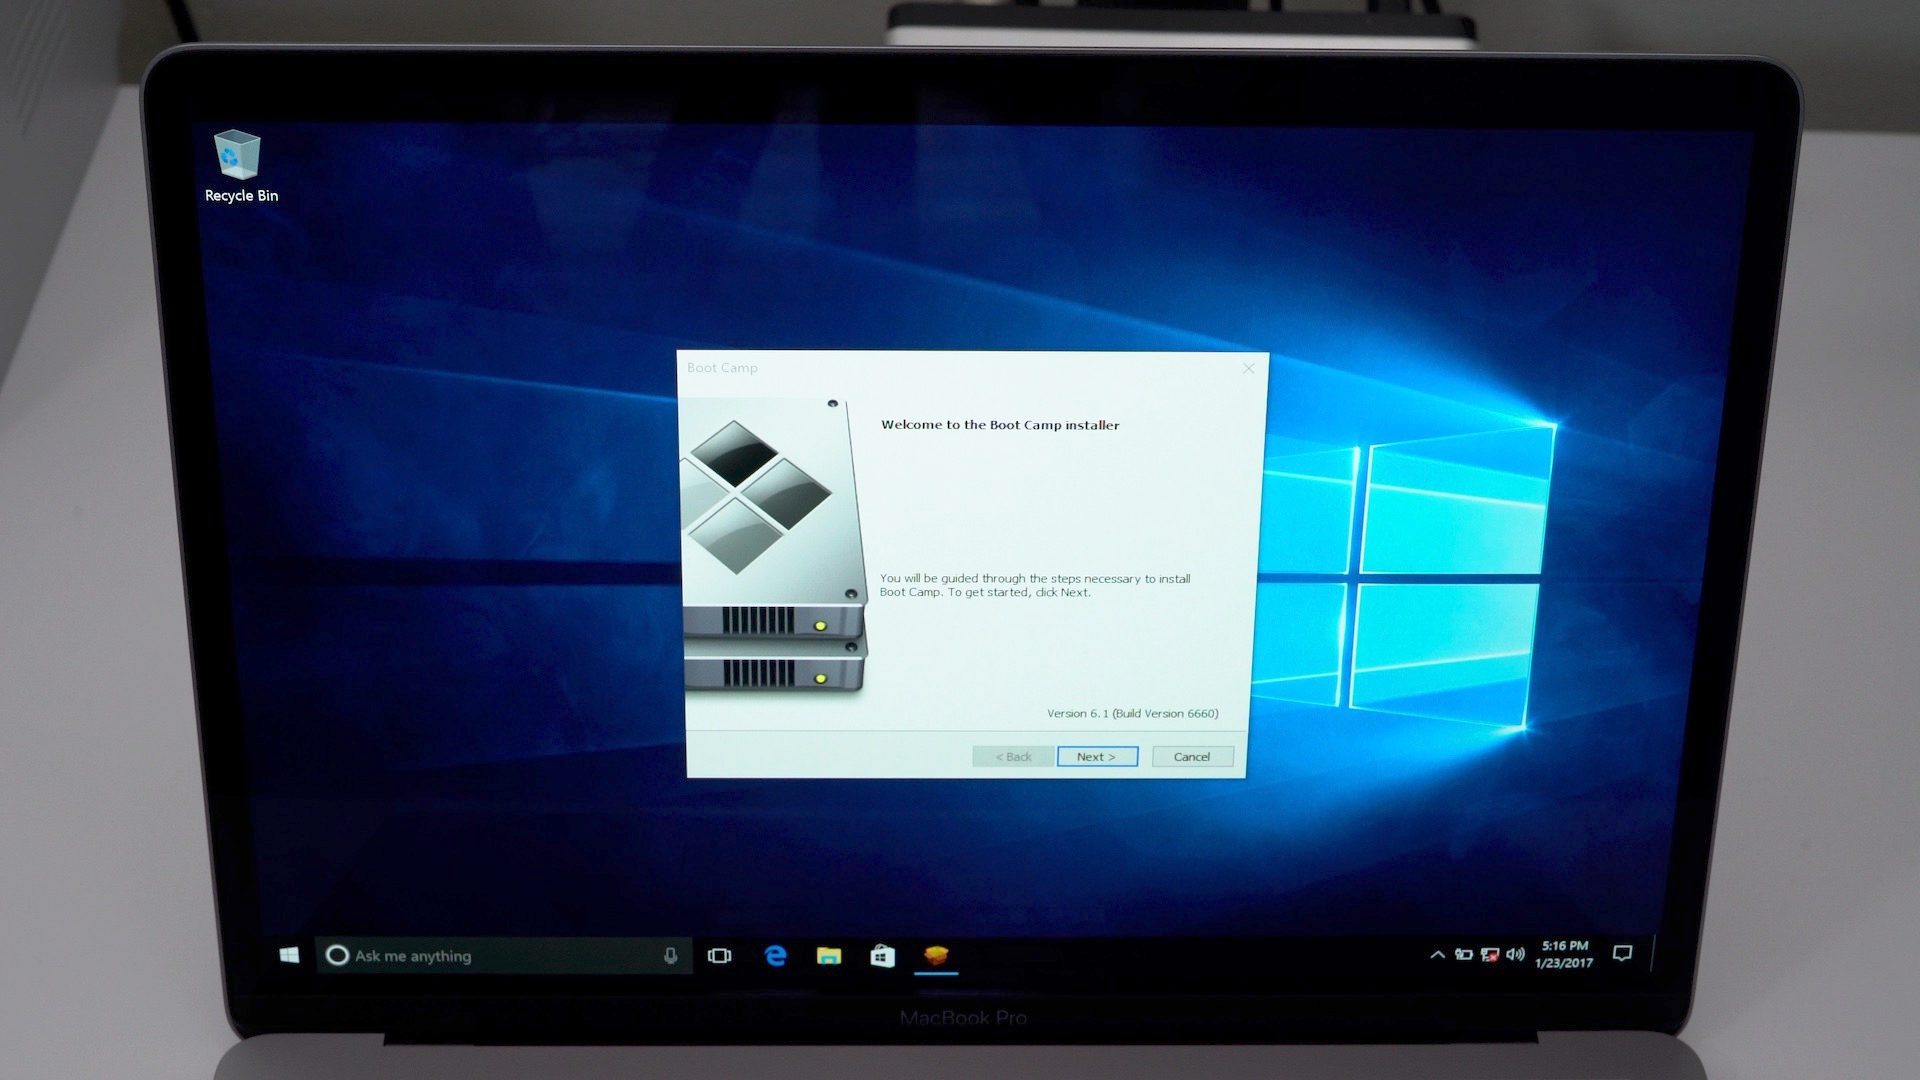 upgrade Windows 8.1 to Windows 10 